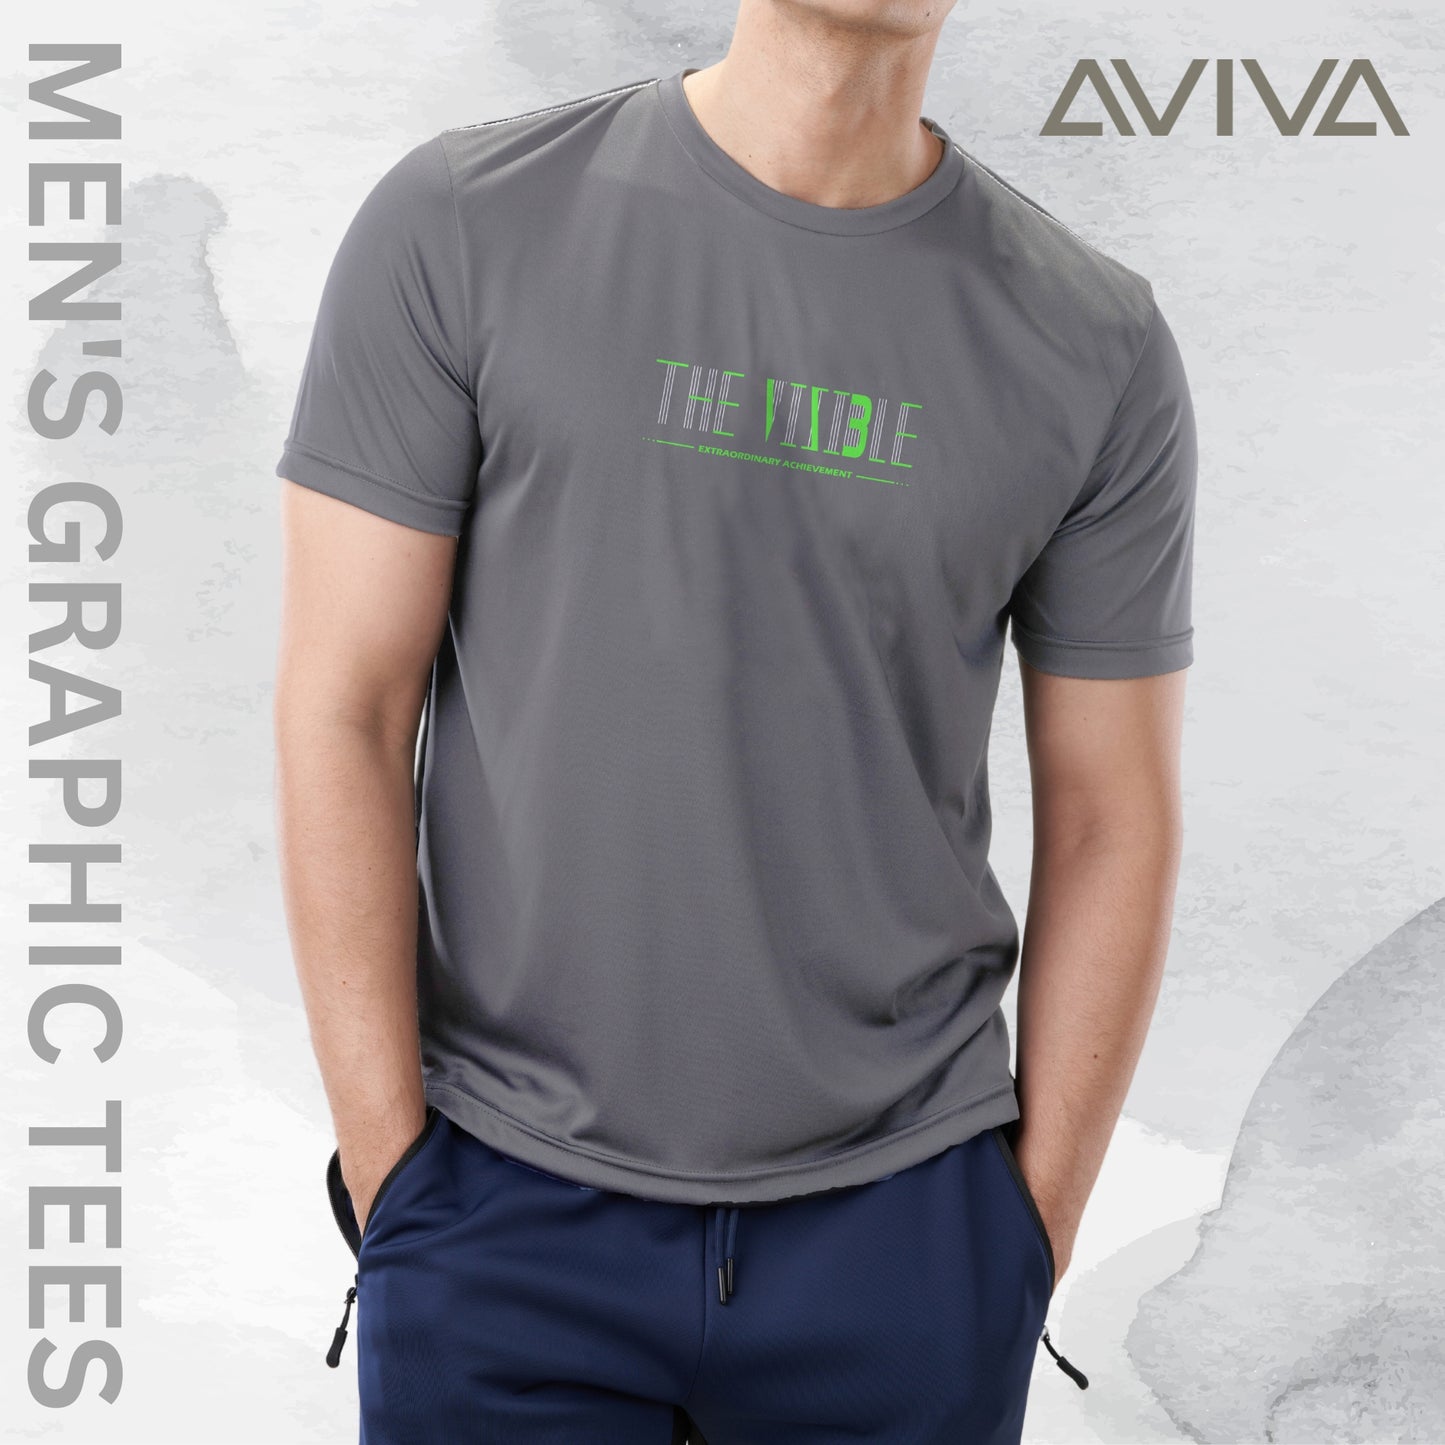 Aviva Men's Graphic Short Sleeve Tee (90-8071)